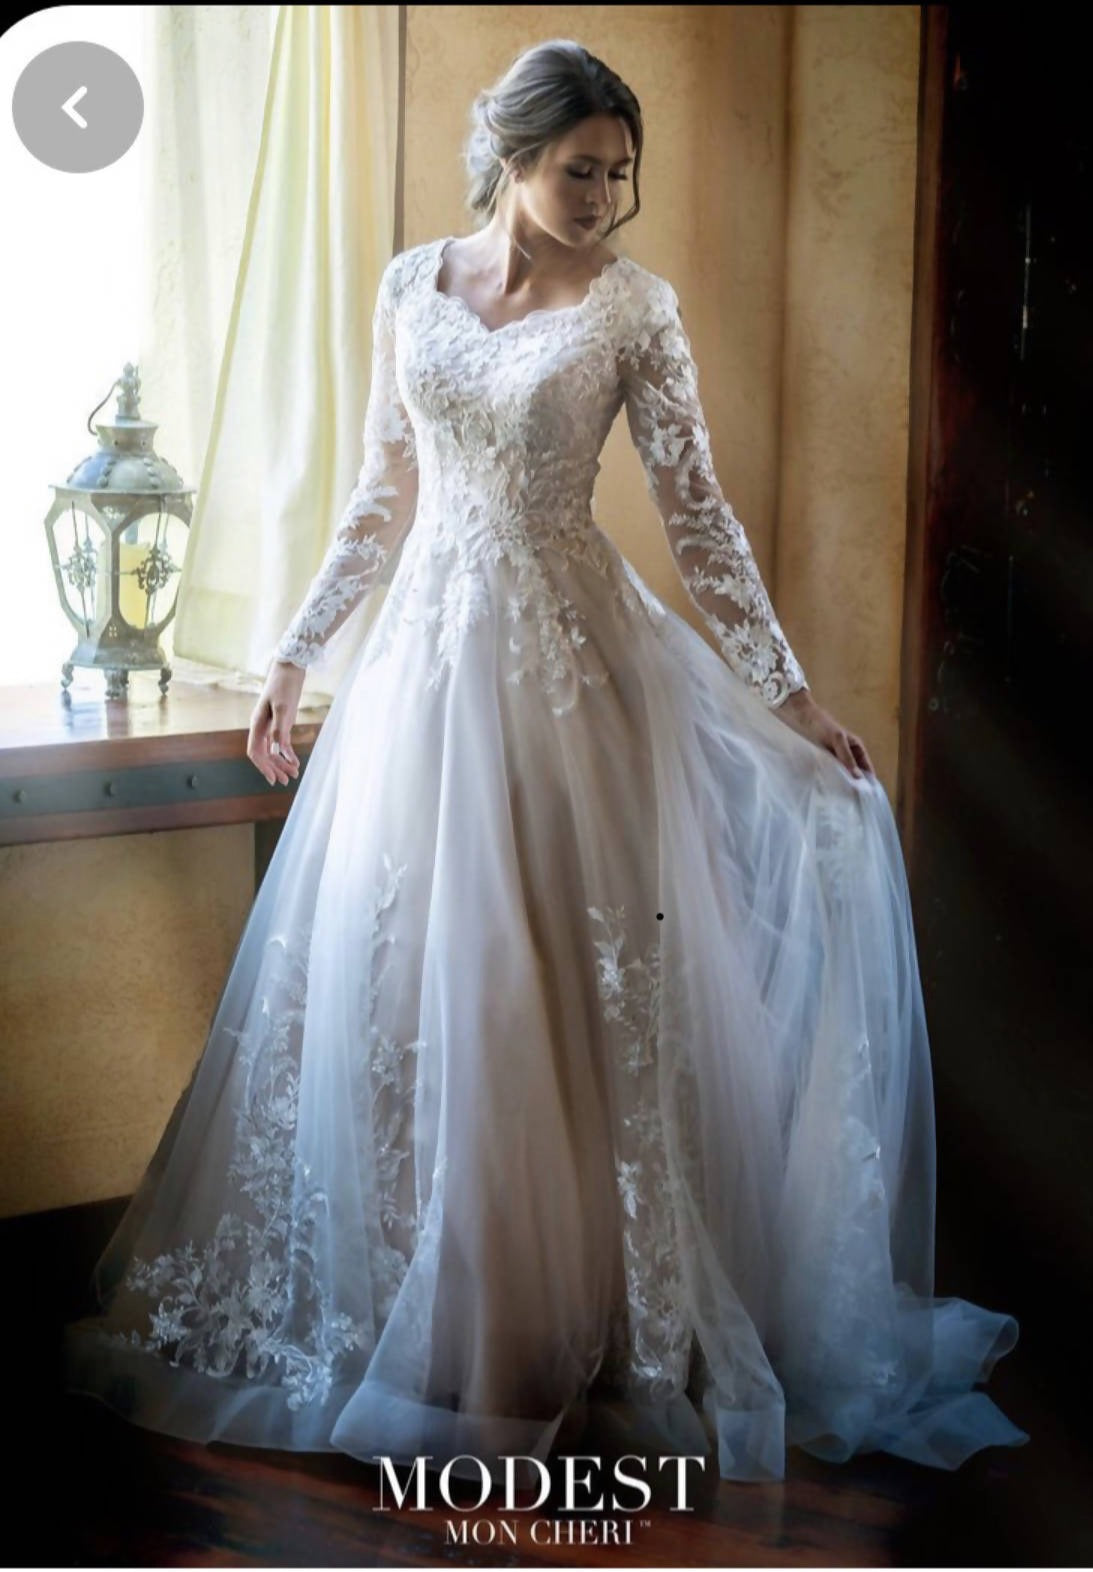 Modest Mon Cheri wedding dress